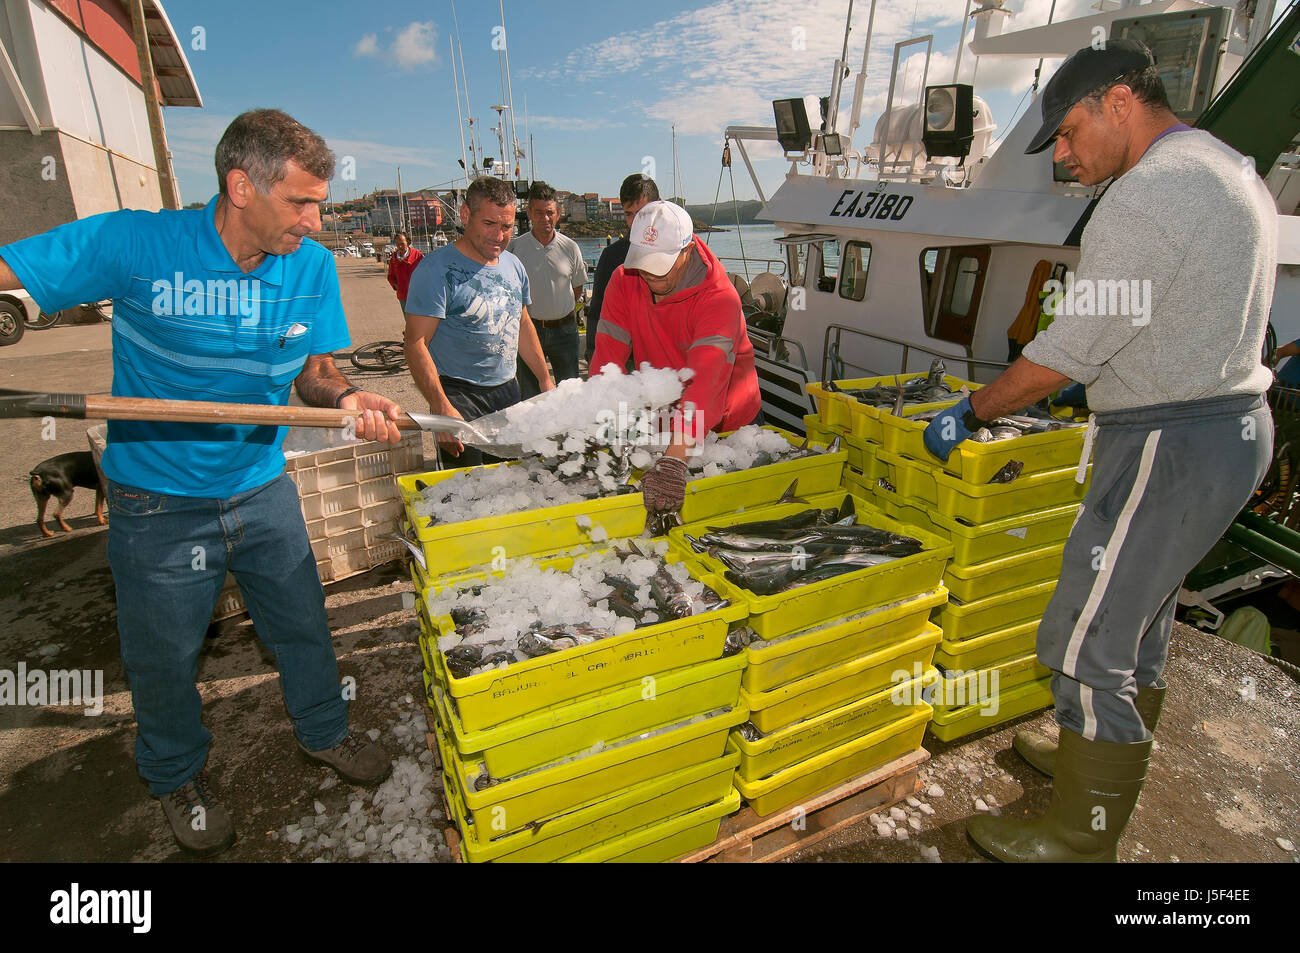 Fishing boat unloading boxes of fish, Camarinas, La Coruna province, Region of Galicia, Spain, Europe Stock Photo